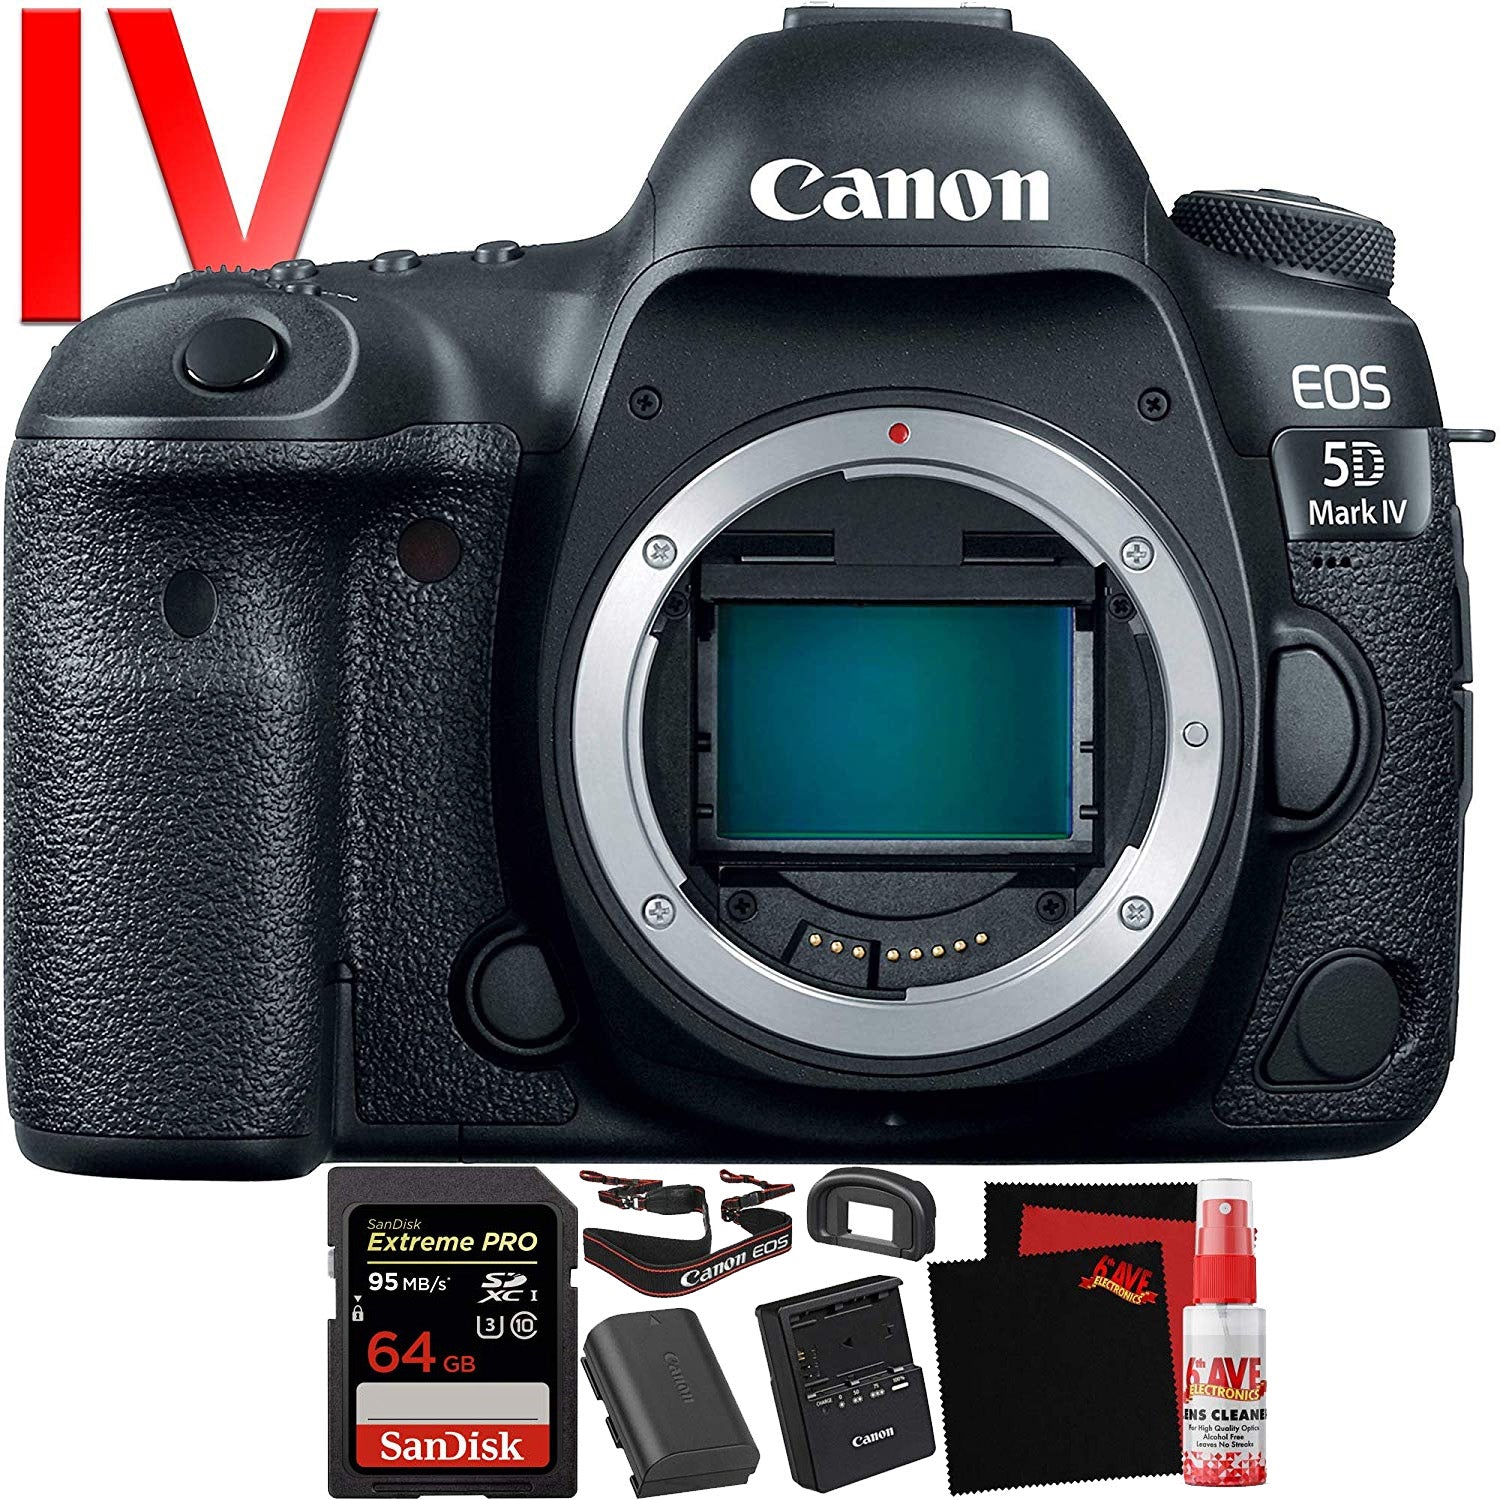 Canon EOS 5D Mark IV DSLR Camera (Body Only) (International Version) - 30.4 Megapixel - 4K Video with Pro Cleaning Kit B Bundle